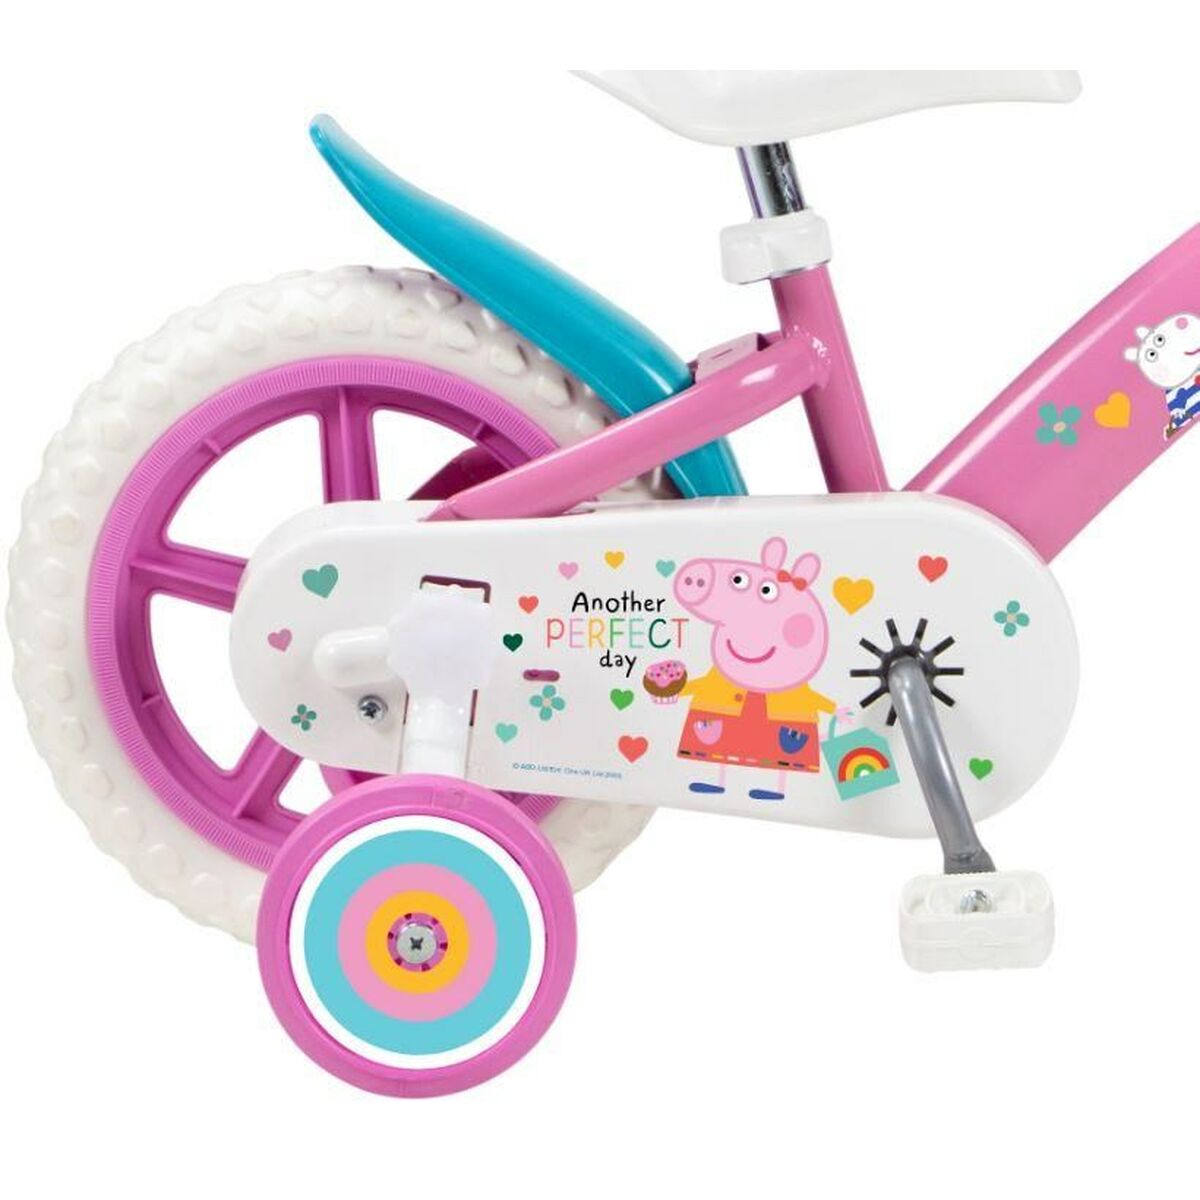 Bicicletta per Bambini Toimsa TOI1195 Peppa Pig